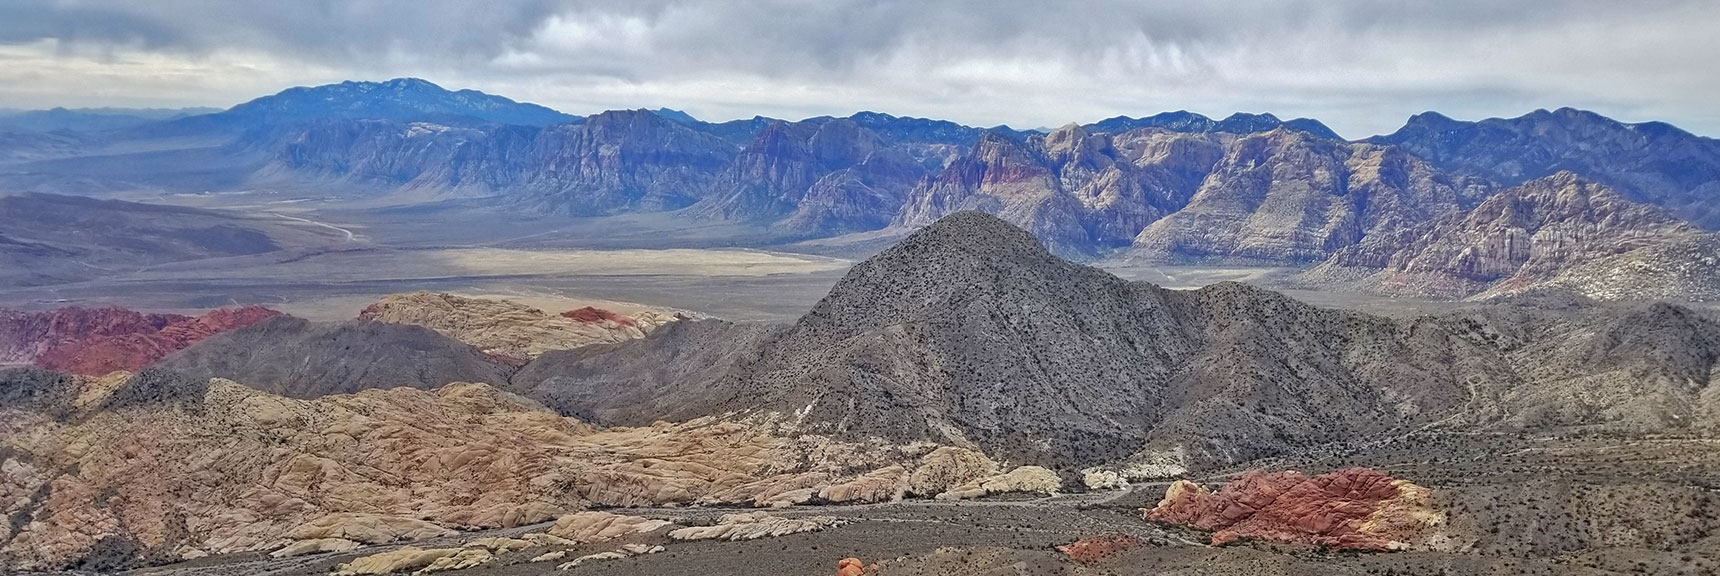 Damsel Peak Summit in Calico Basin, Nevada 006